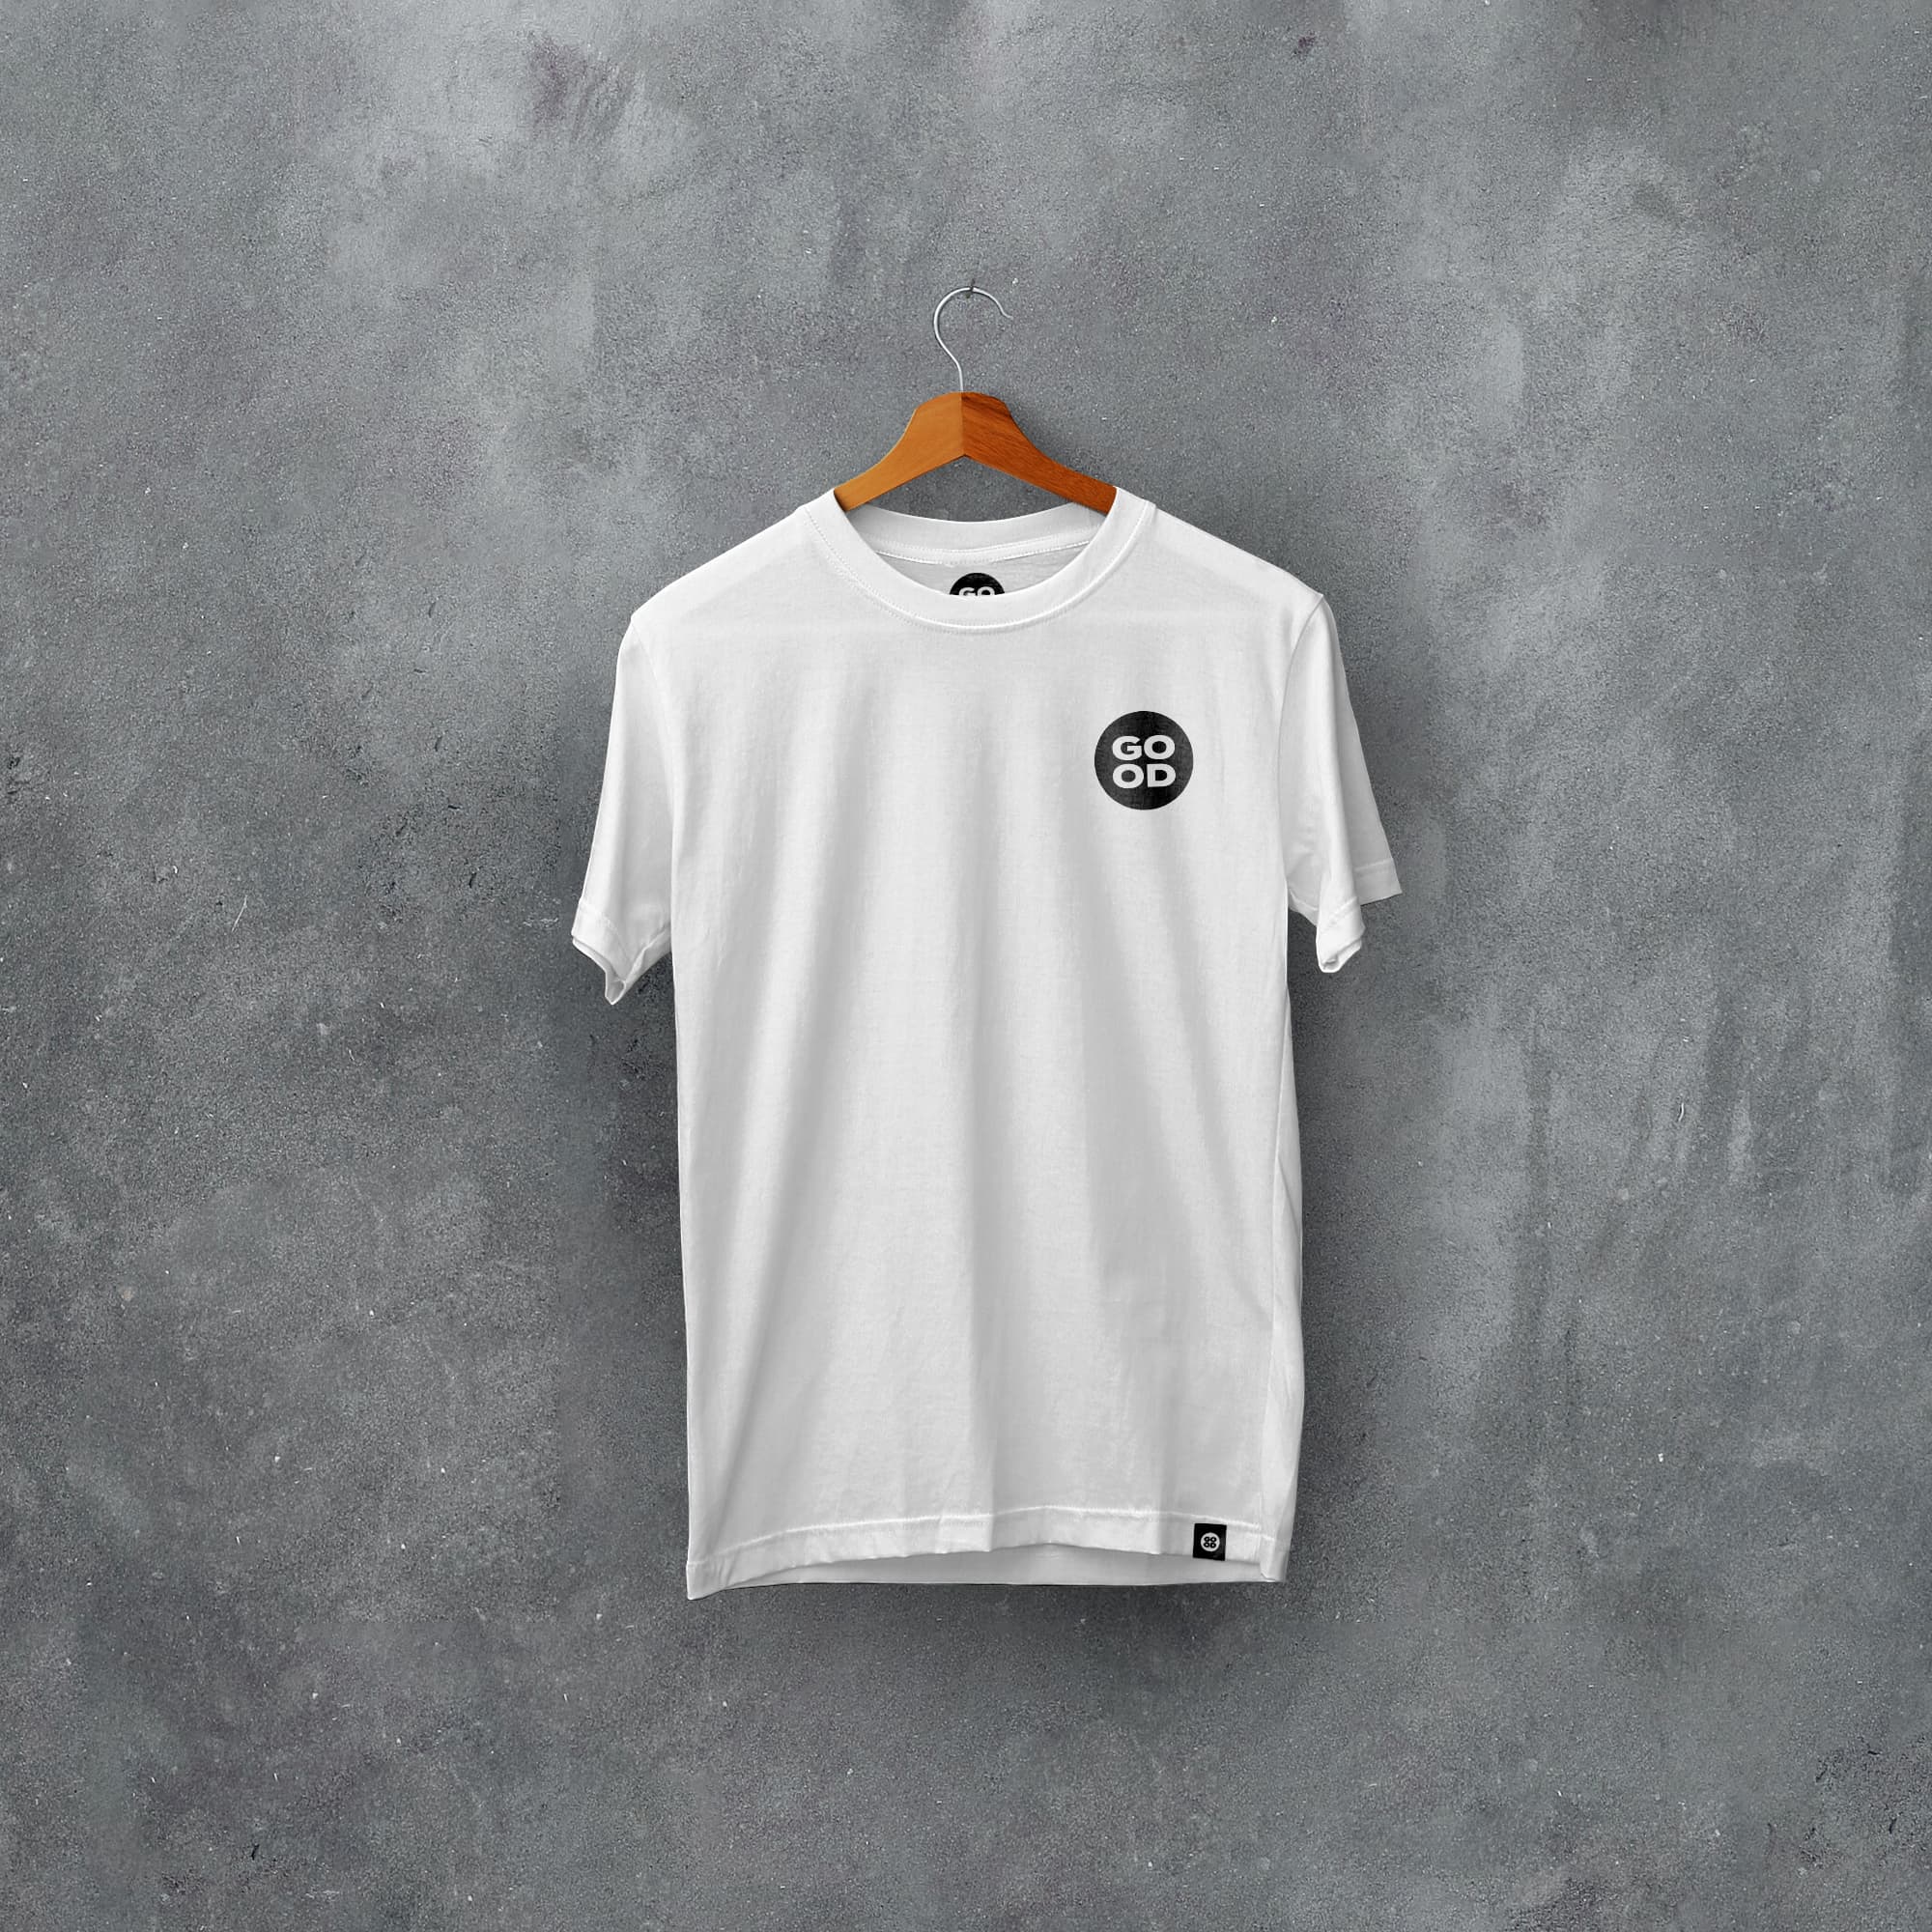 Colchester Classic Kits Football T-Shirt